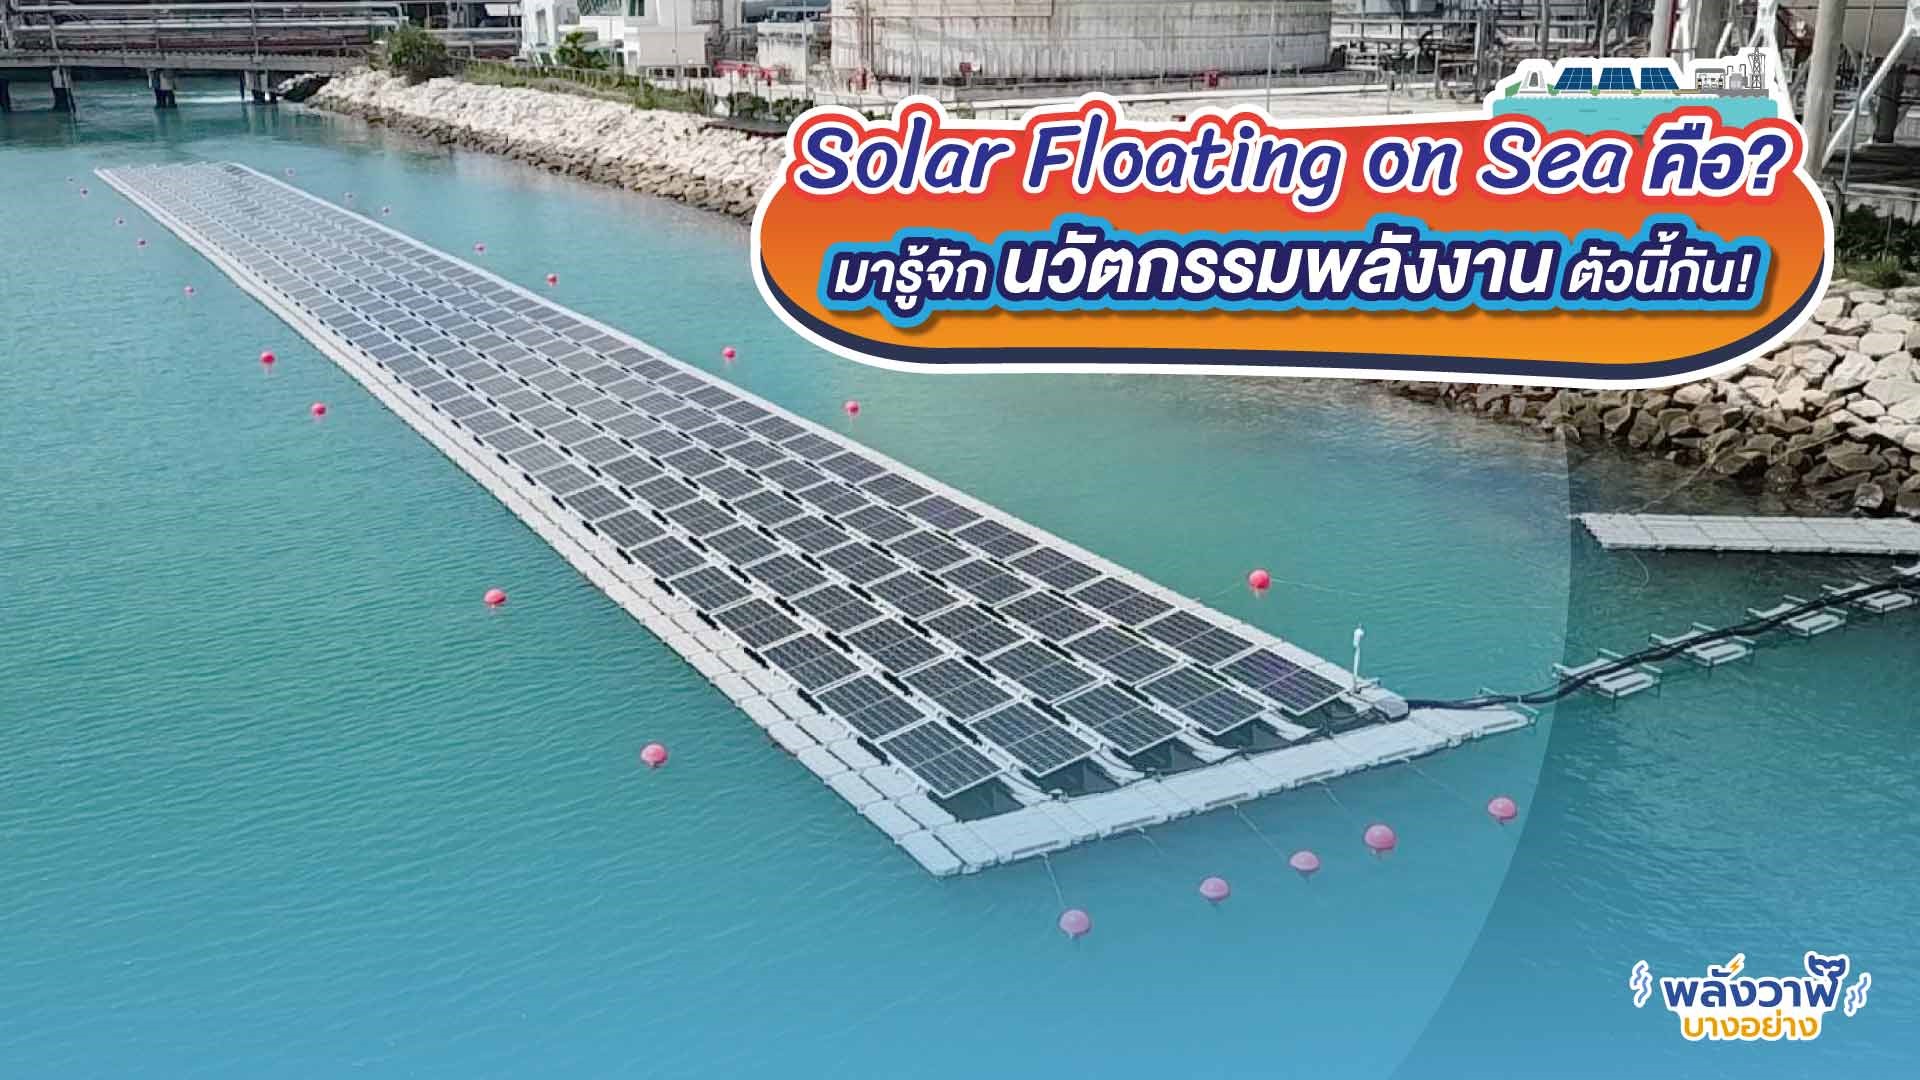 Solar Floating on Sea คือ? มารู้จักนวัตกรรมพลังงานตัวนี้กัน!, Whale Energy Station